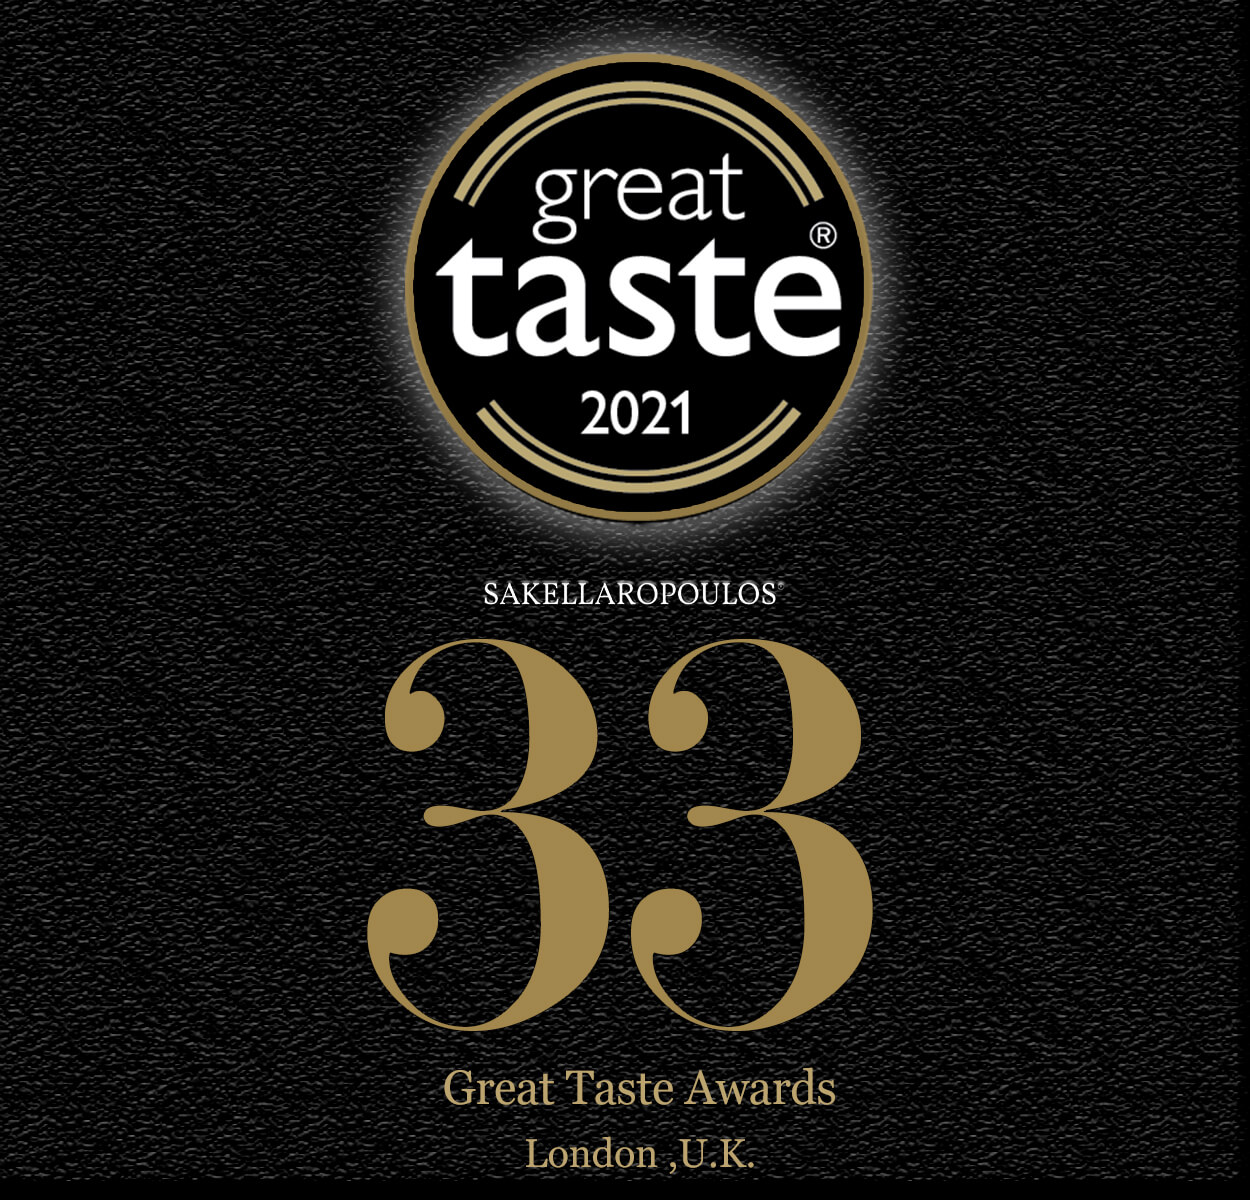 great taste awards 2021 βιολογικοί ελαιώνες σακελλαρόπουλου 33 βραβεύσεις